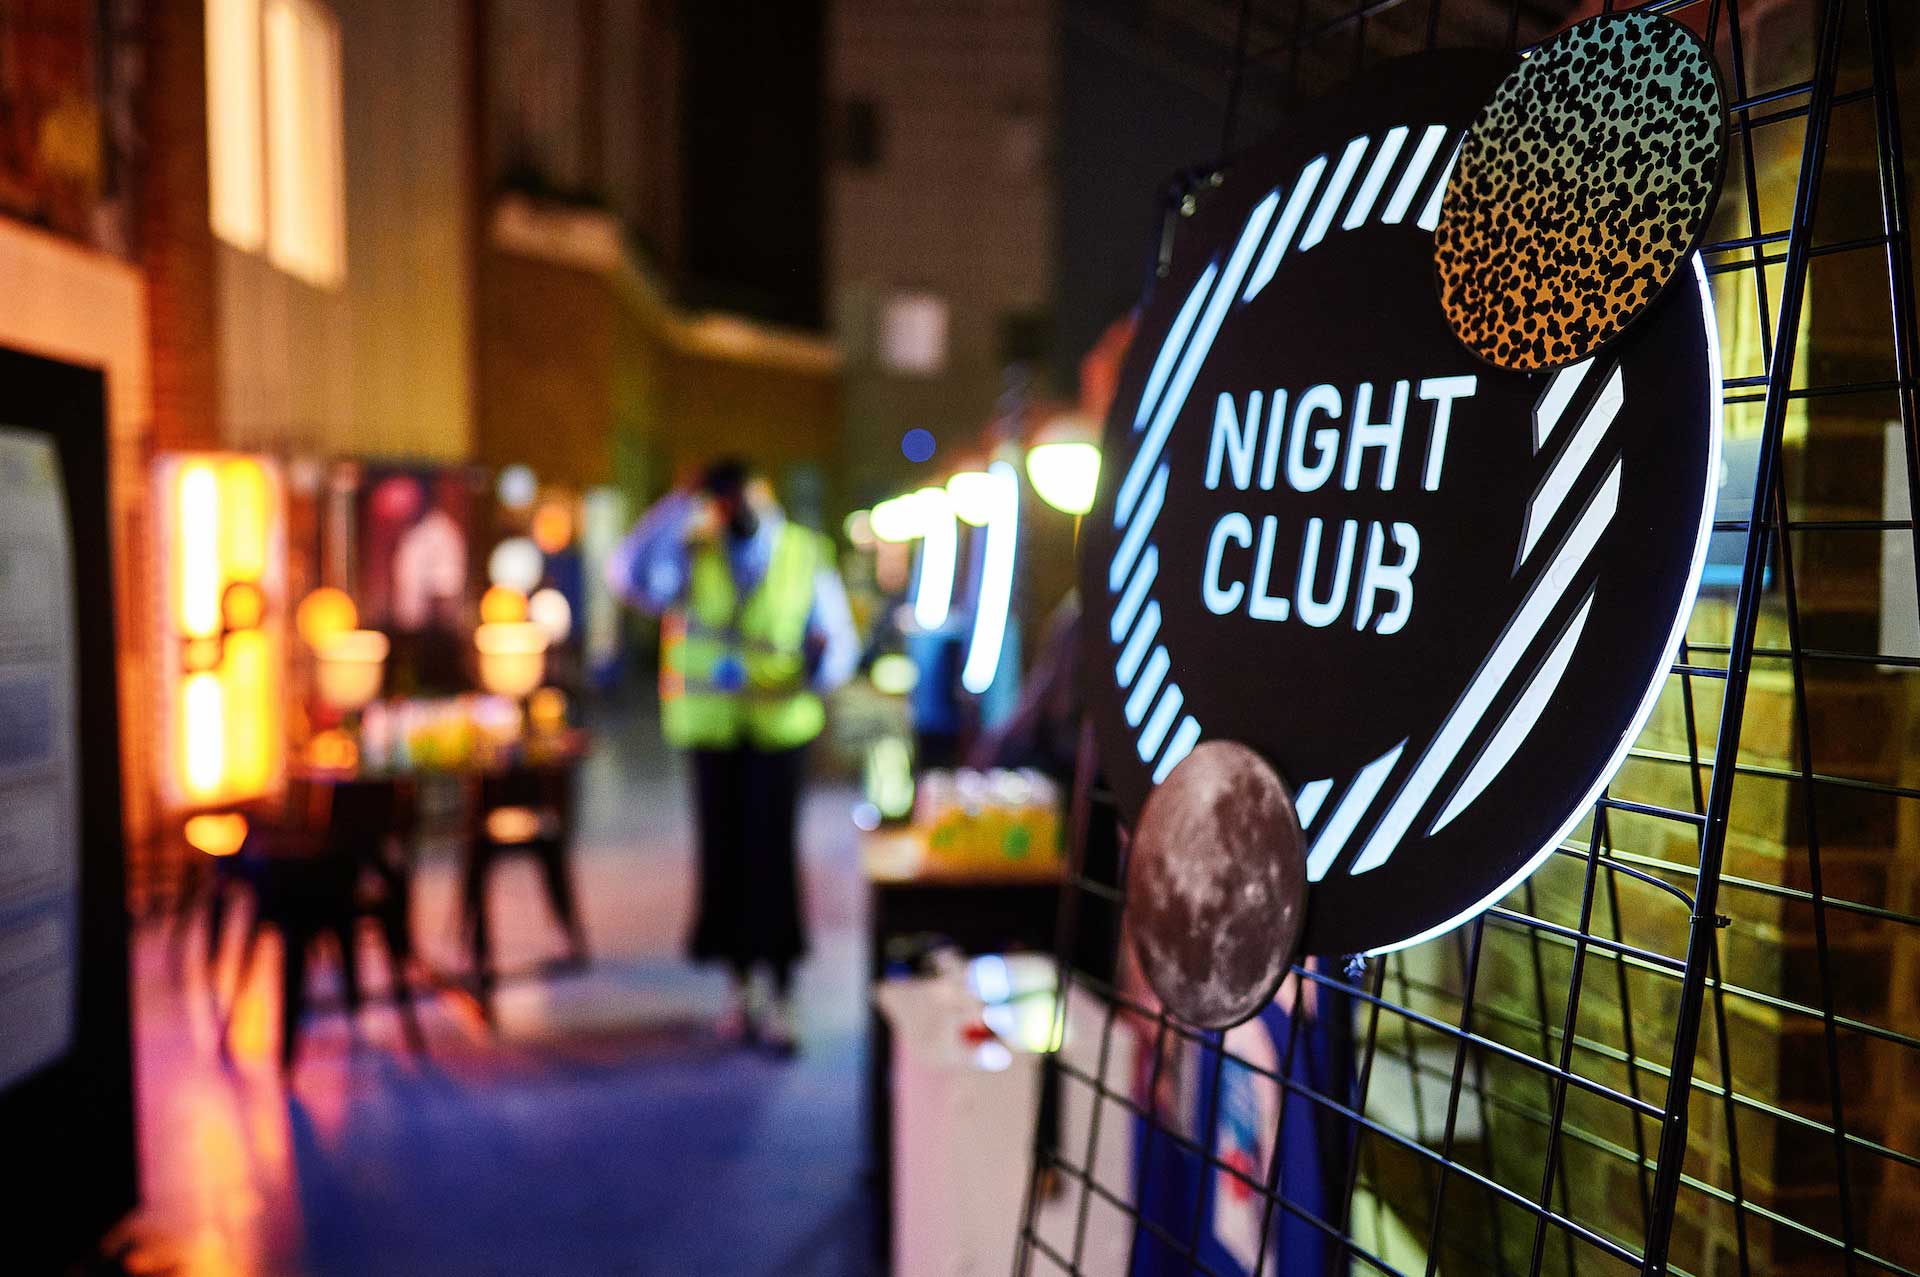 Night Club transformational engagement programme